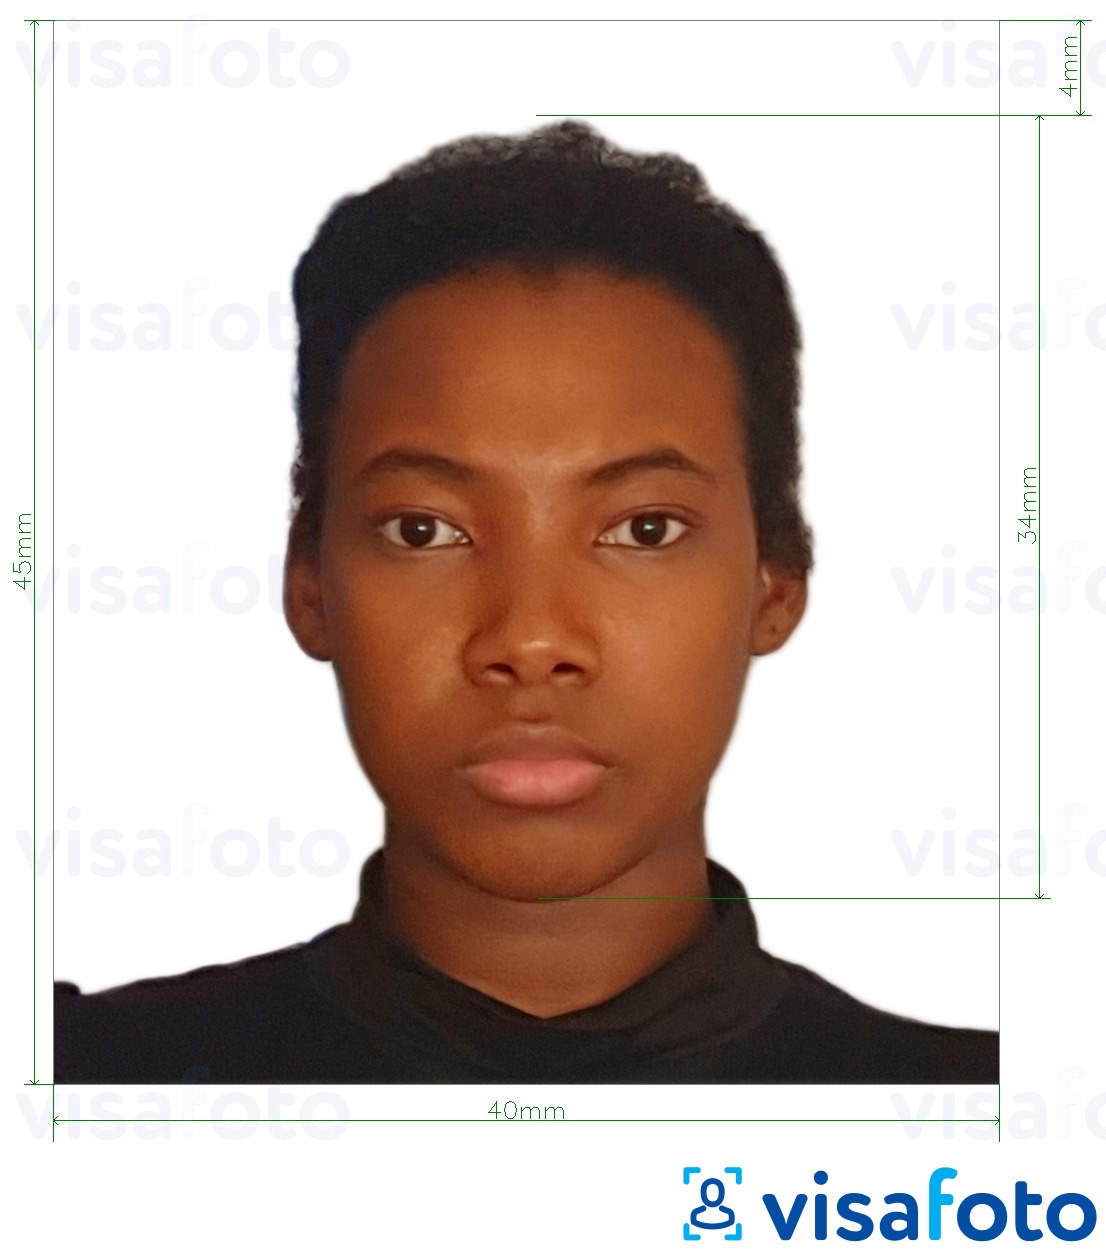 Contoh dari foto untuk Visa Tanzania 40x45 mm (4x4.5 cm) dengan ukuran spesifikasi yang tepat